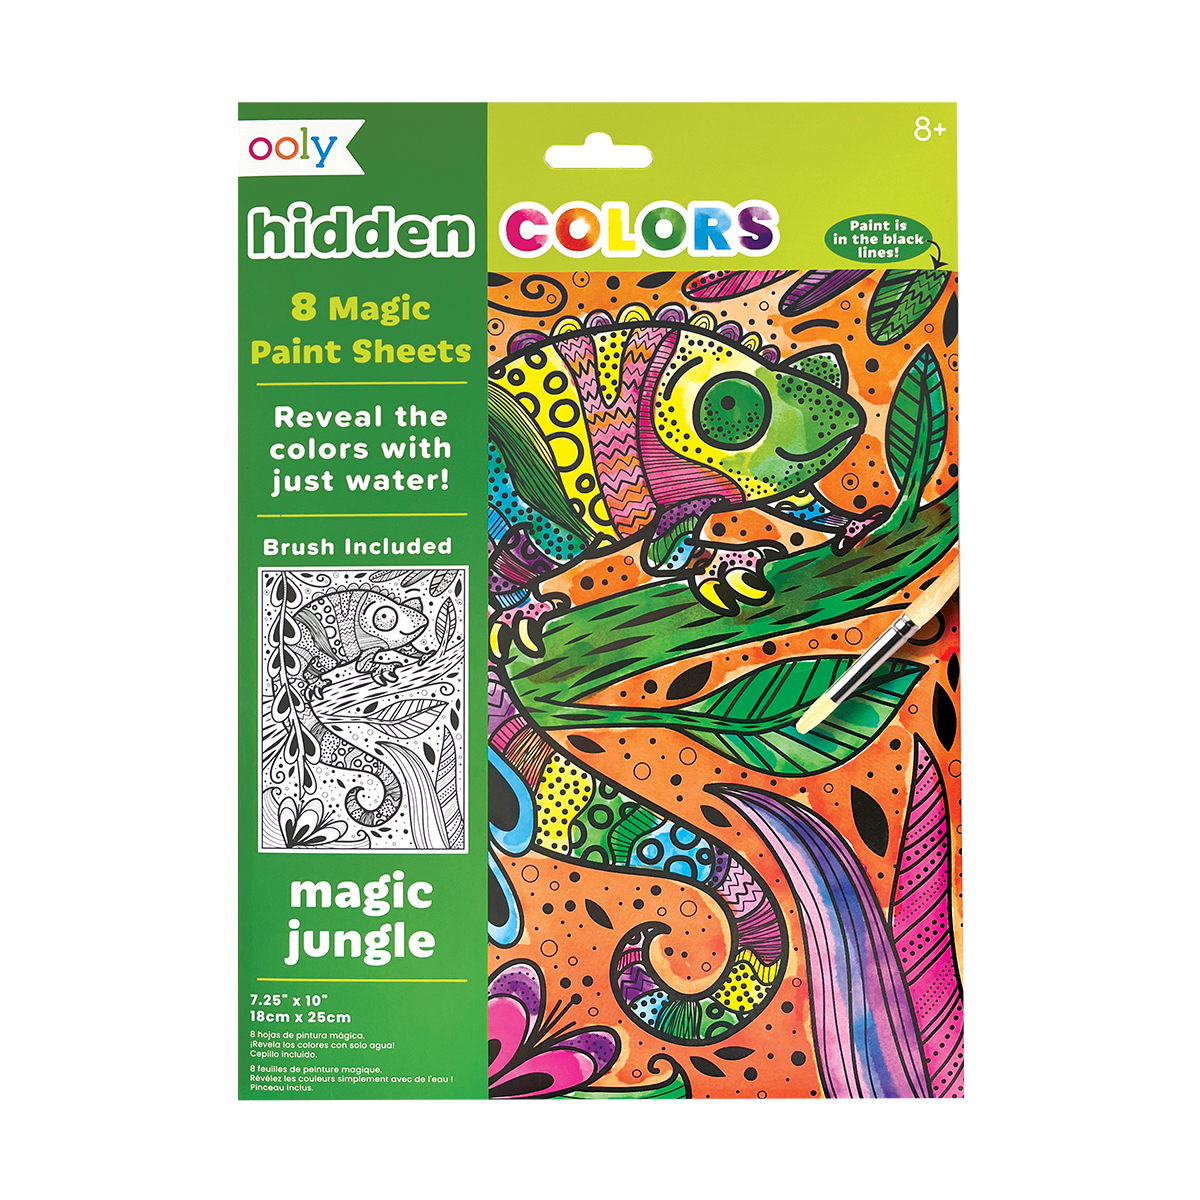 Hidden Colors Magic Paint Sheets - Magic Jungle by OOLY